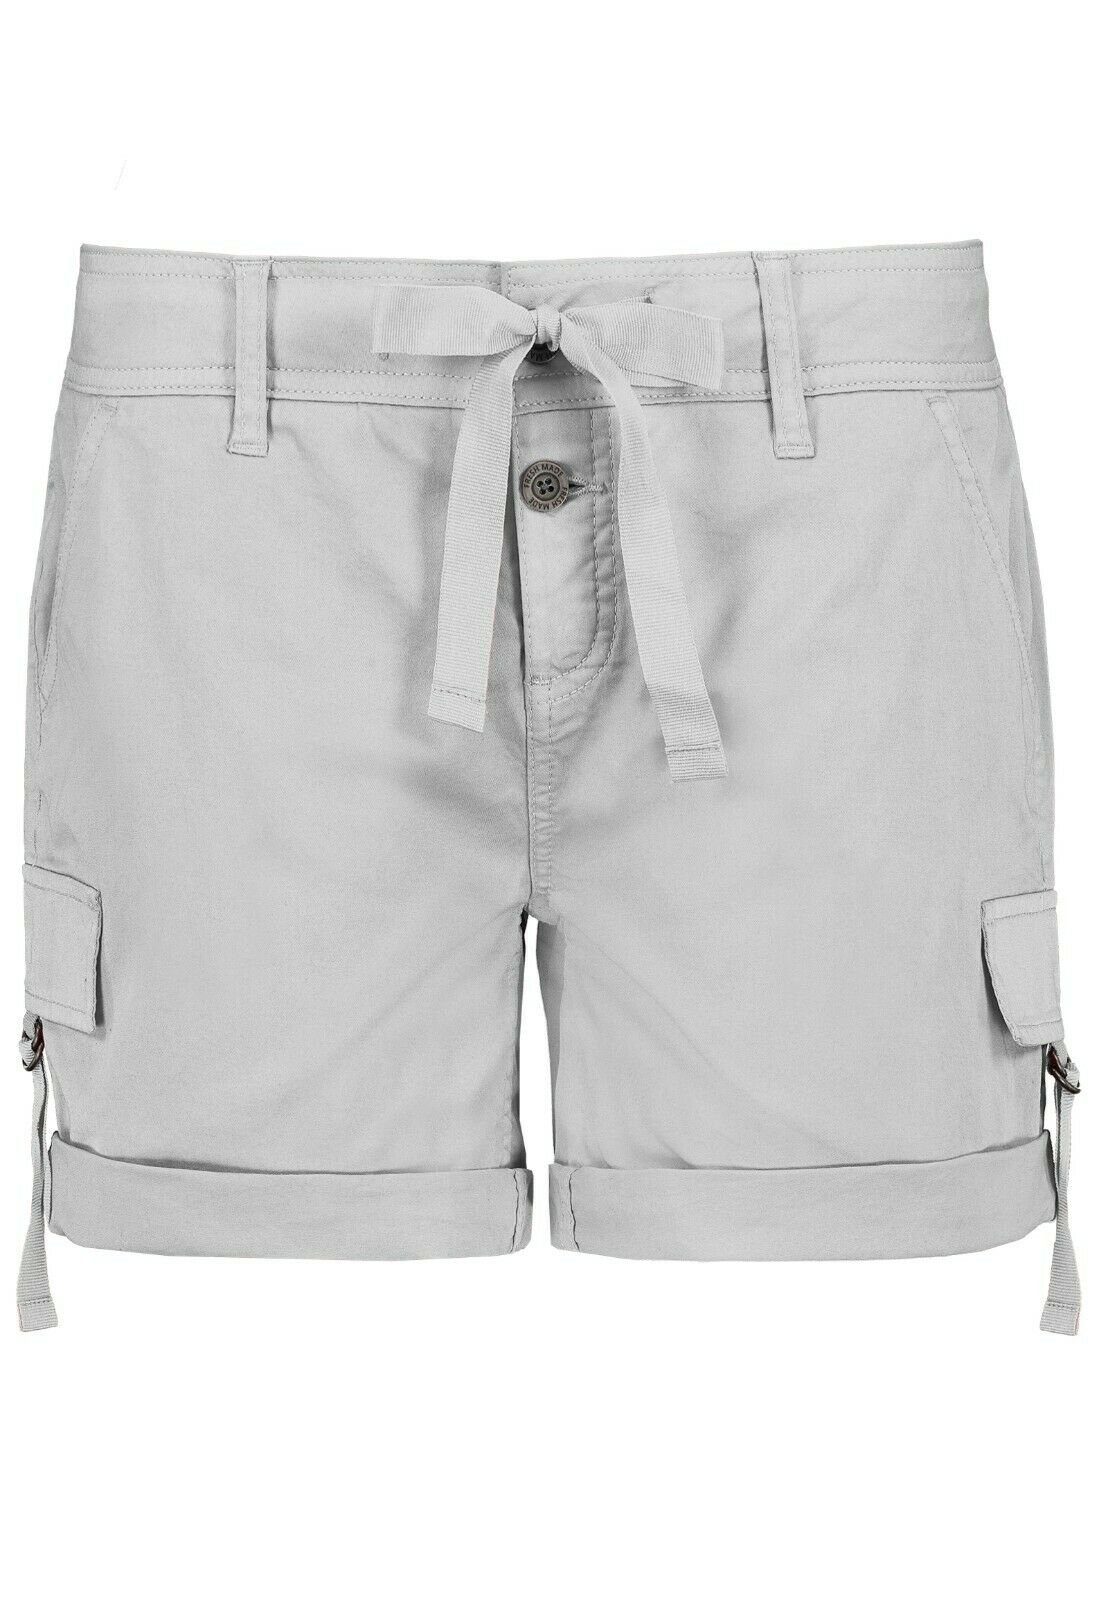 Fresh Bermuda Shorts Bermudas Kurze Hose Sommer Short Hotpants Made